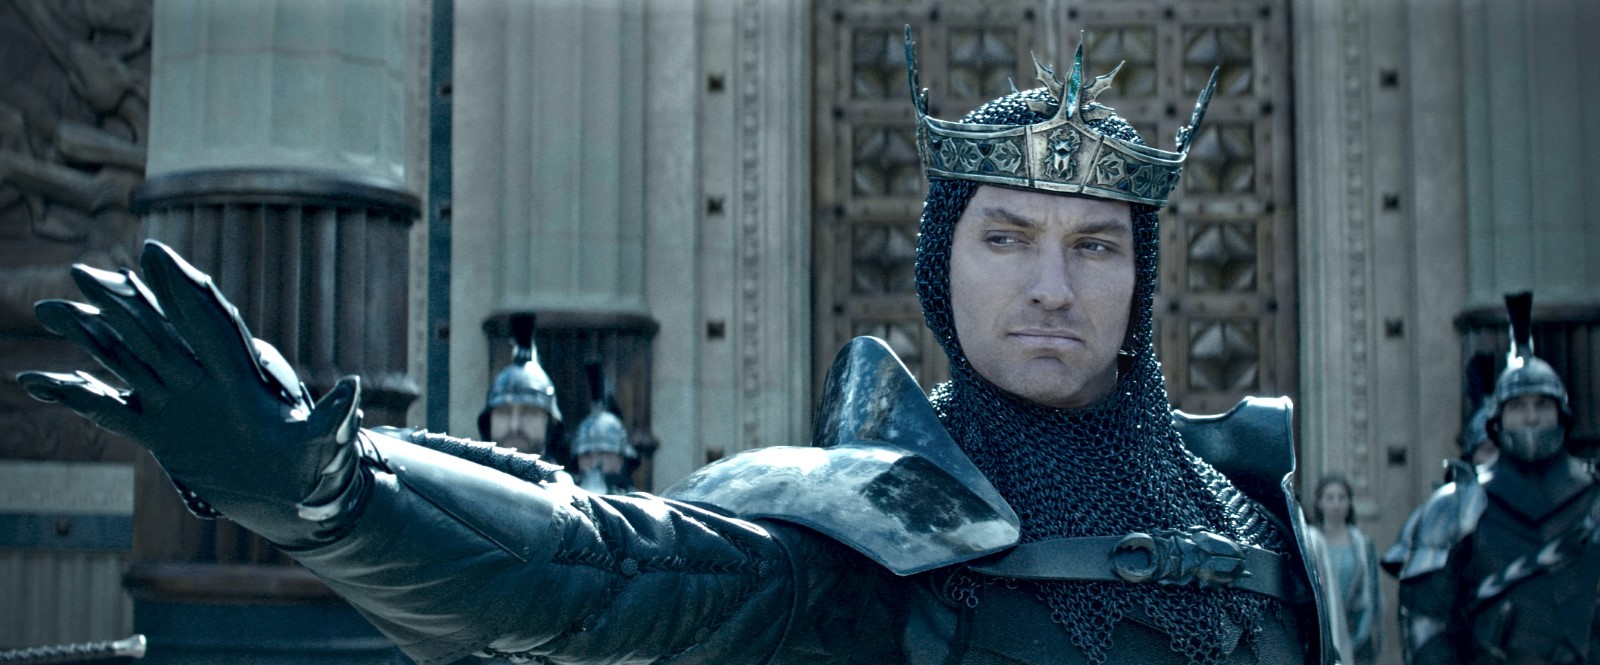 Hd Online Film 2017 Watch King Arthur: Legend Of The Sword Of Justice